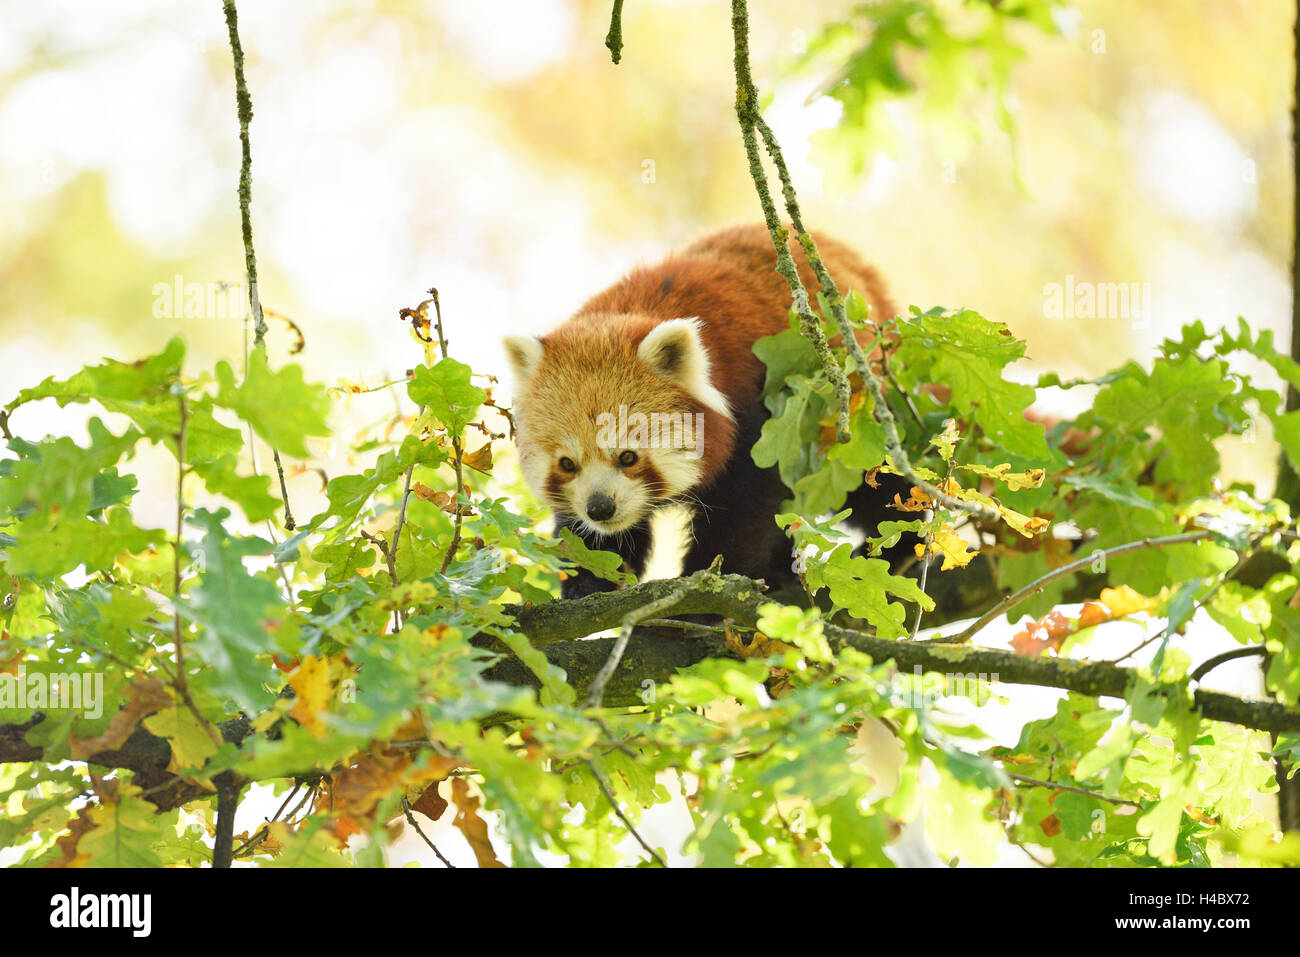 Red panda, Ailurus fulgens, tree, branches, side view, climbing Stock Photo